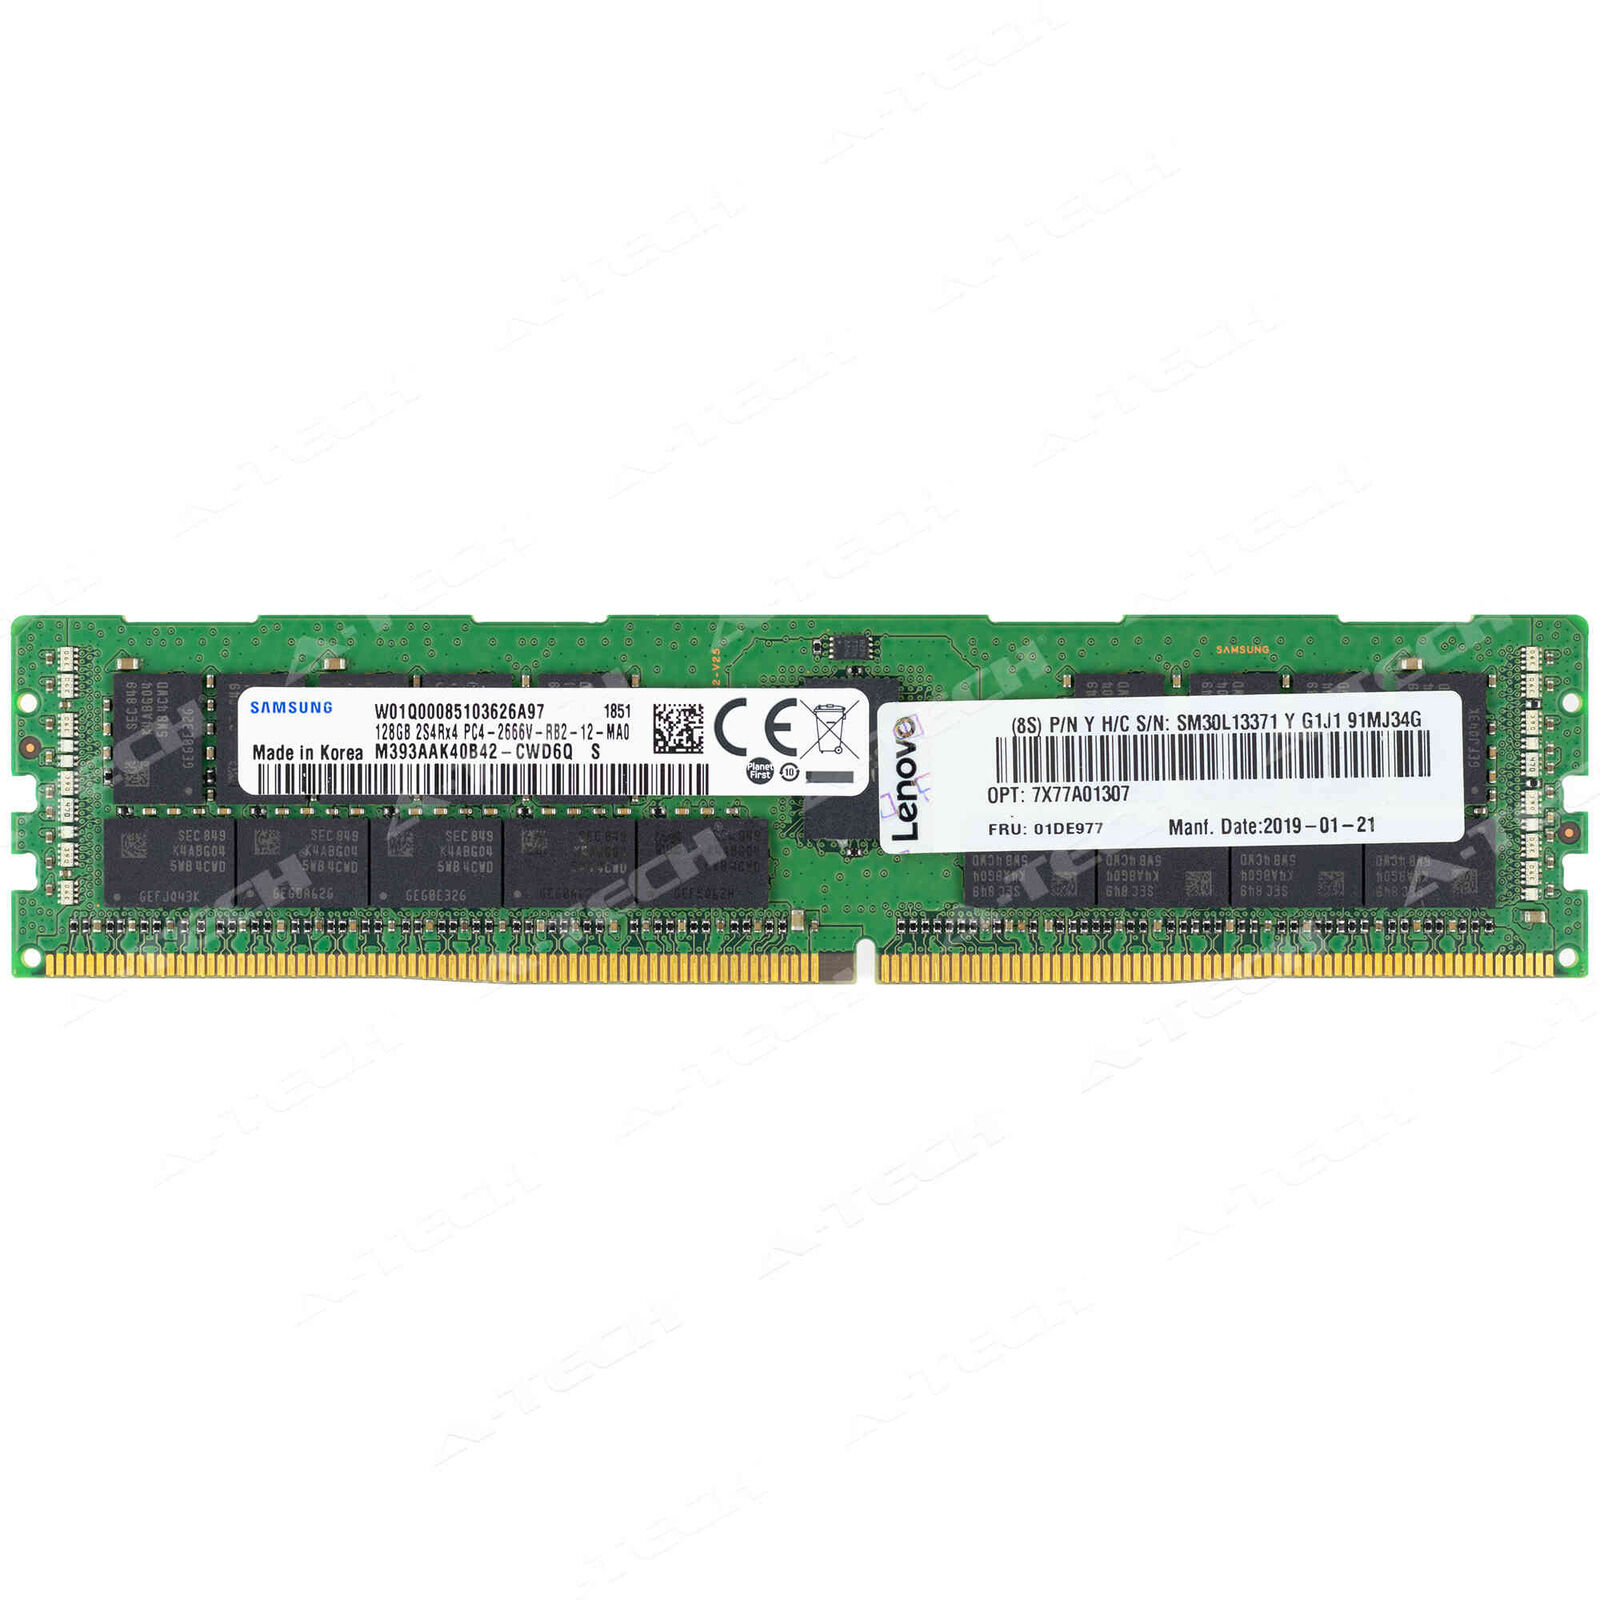 IBM-Lenovo 128GB DDR4 2666MHz REG ECC RDIMM 7X77A01307 01DE977 Server Memory RAM